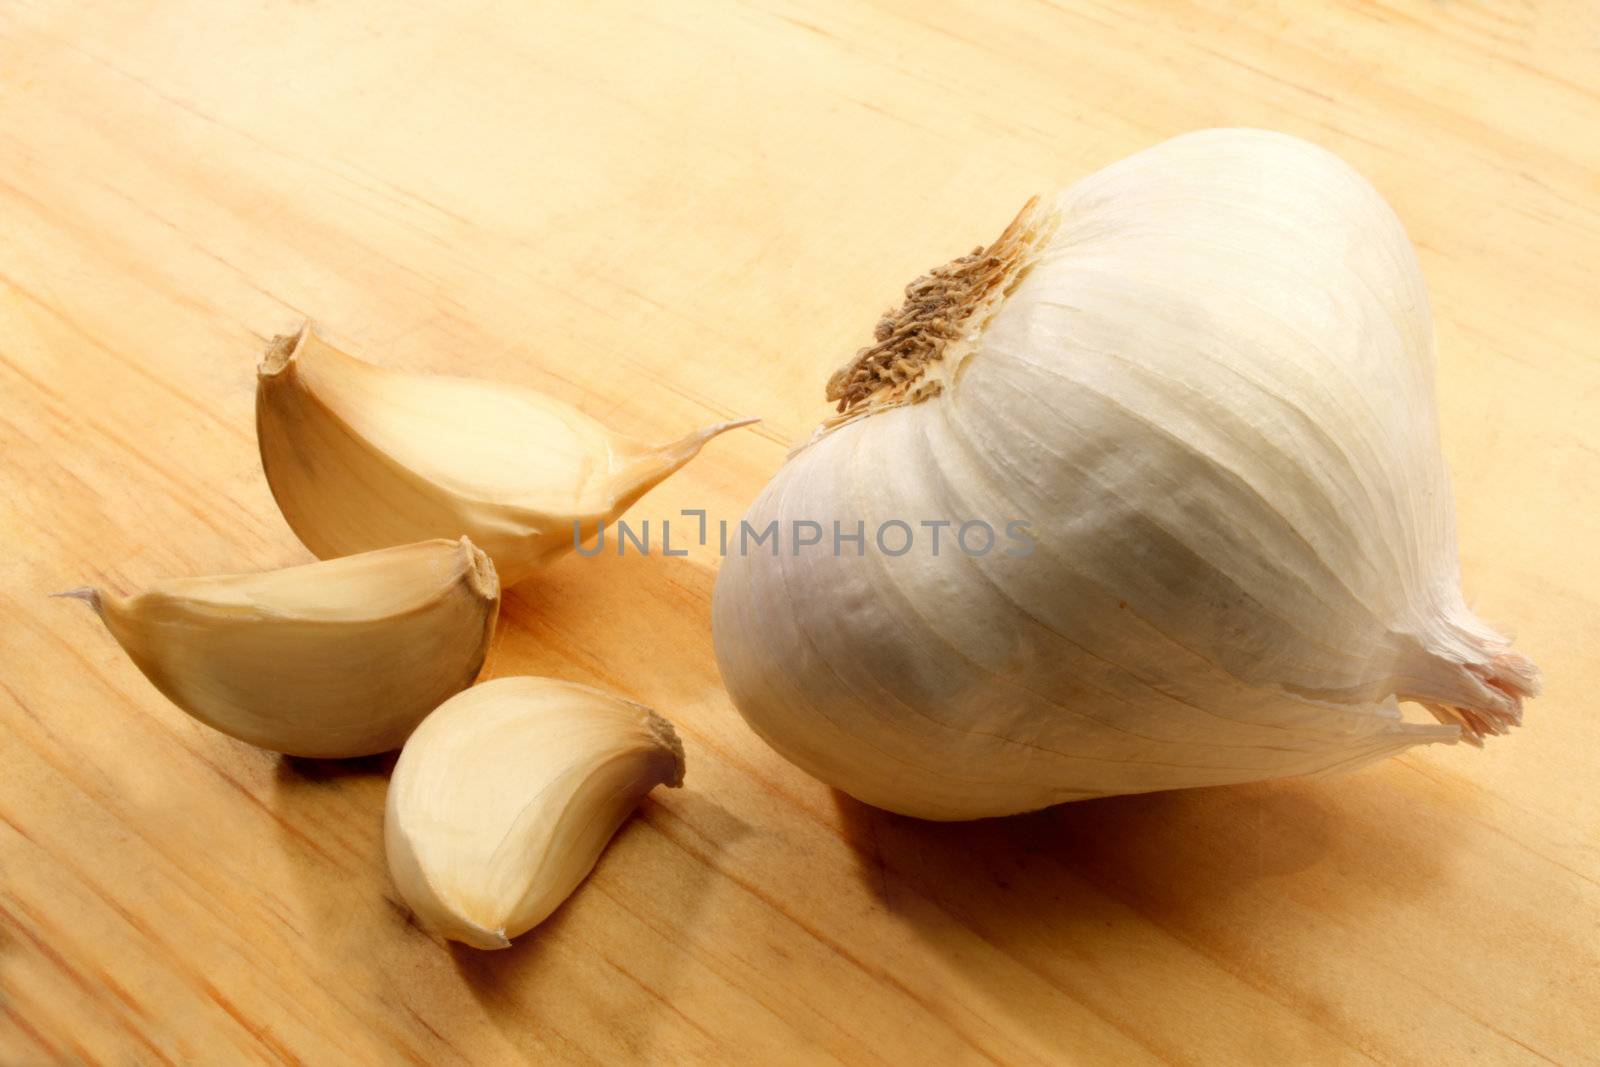 Garlic by carterphoto